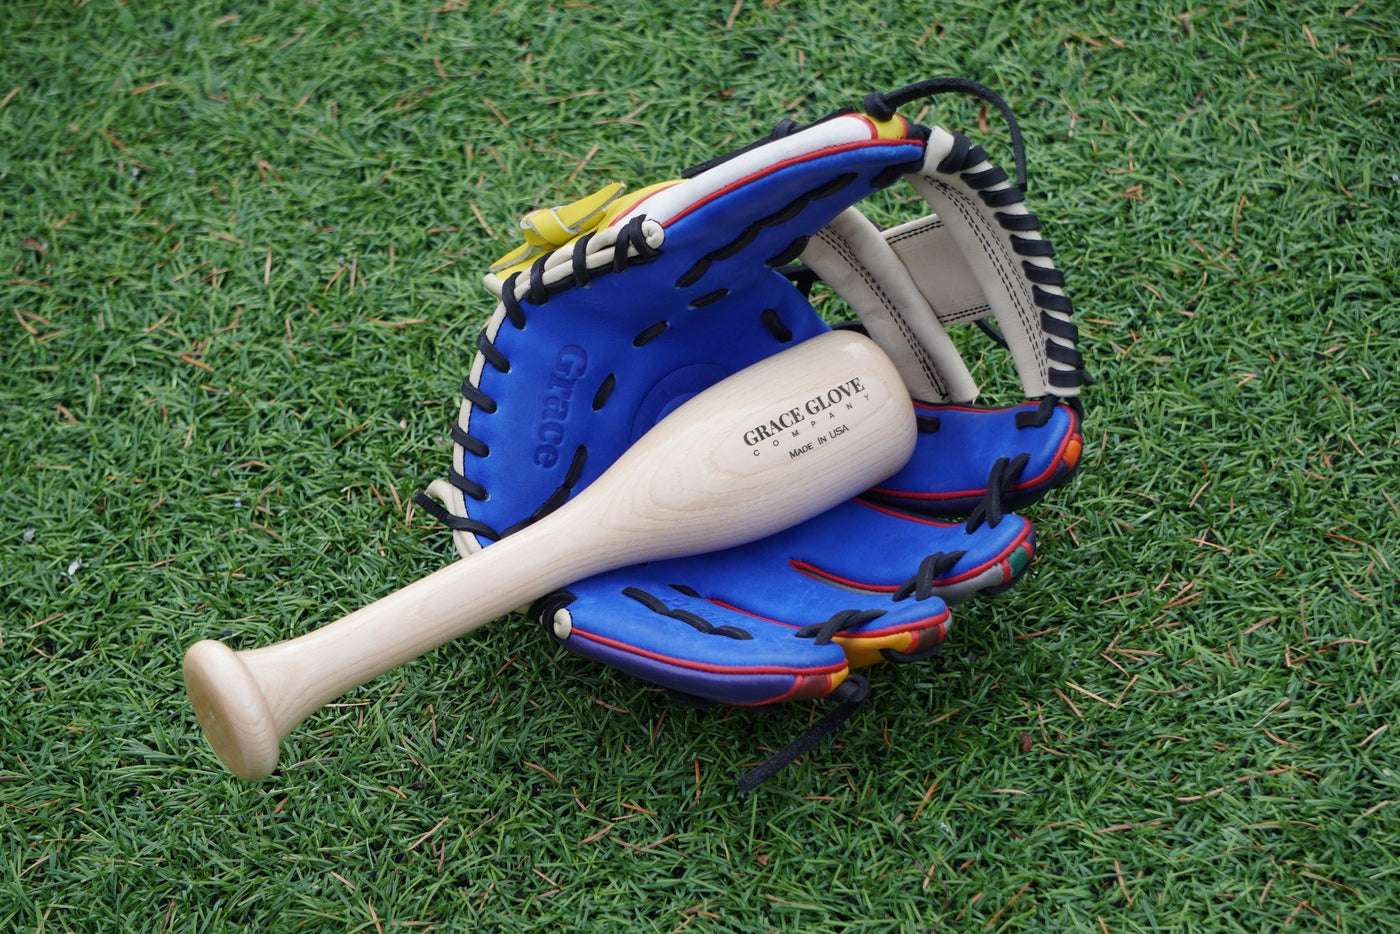 Baseball Glove Mallet - Grade A Hickory Wood